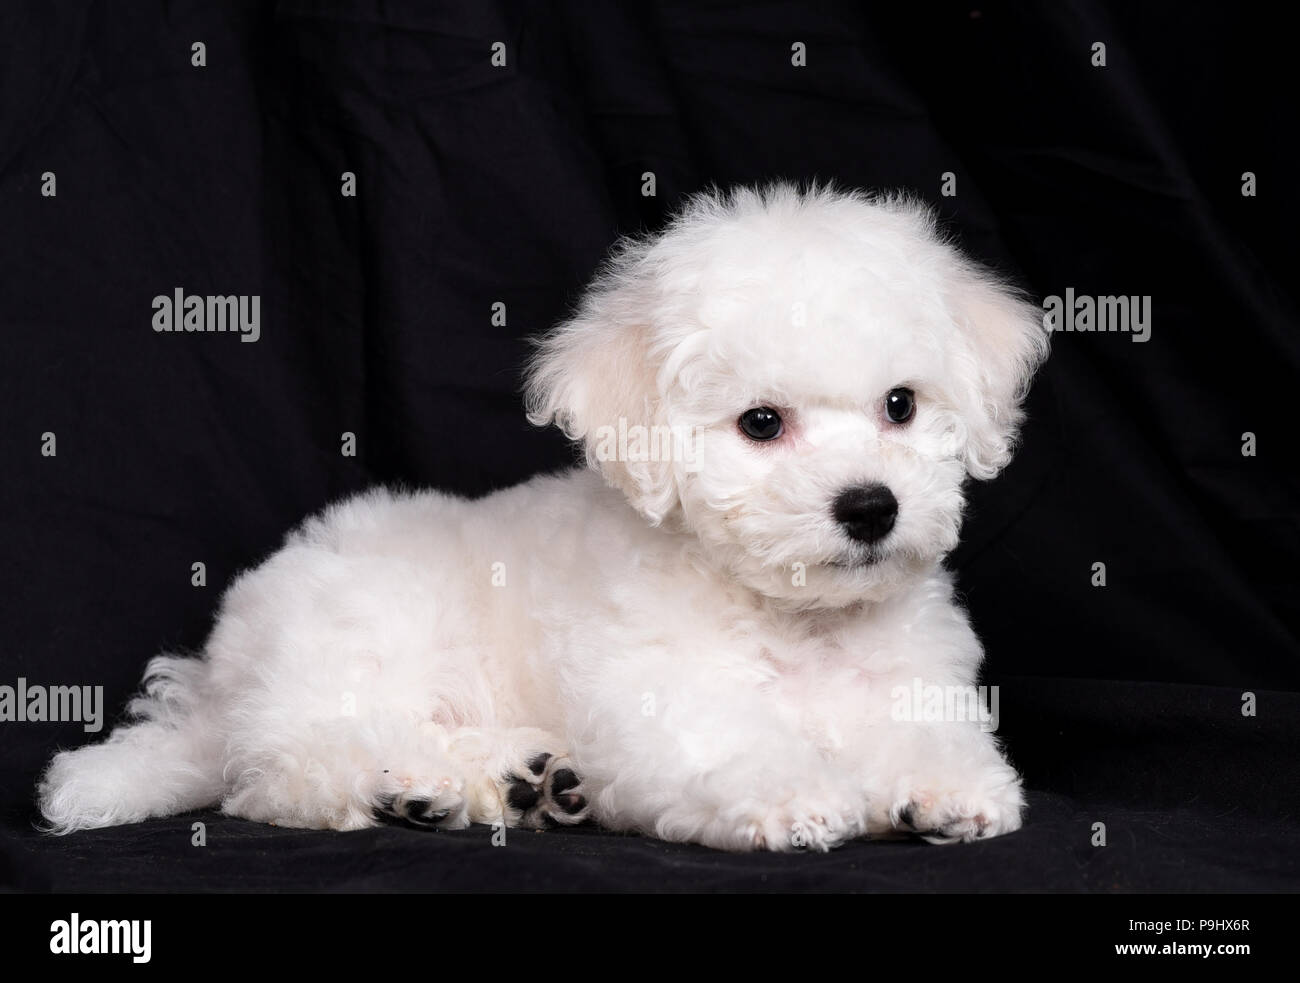 Bichon Frise (curly lap dog) puppy. A 